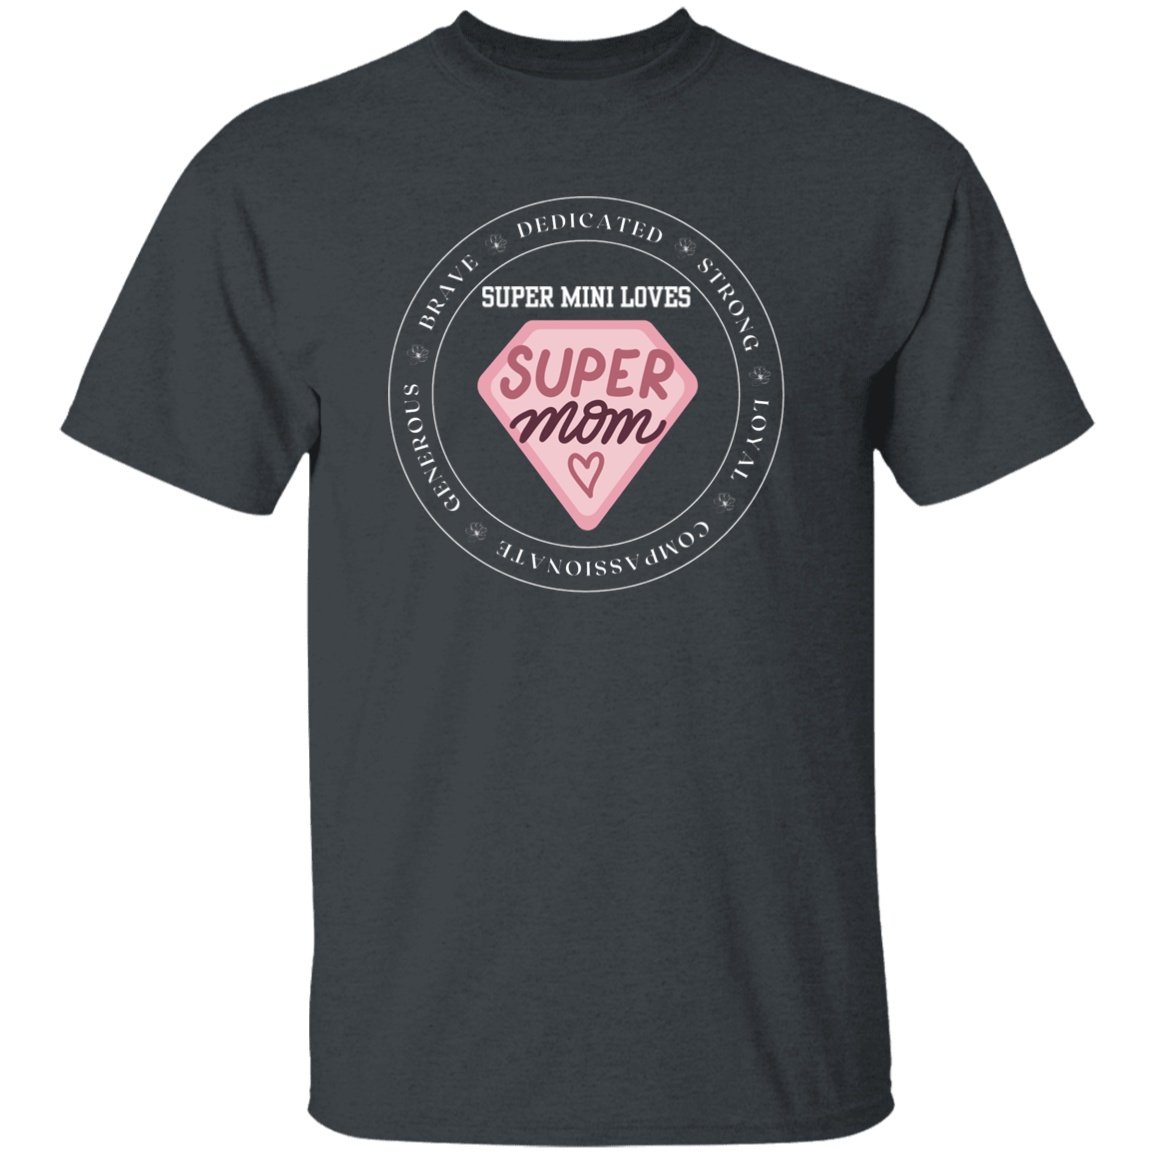 Supermom - mini Youth 100% Cotton T-Shirt